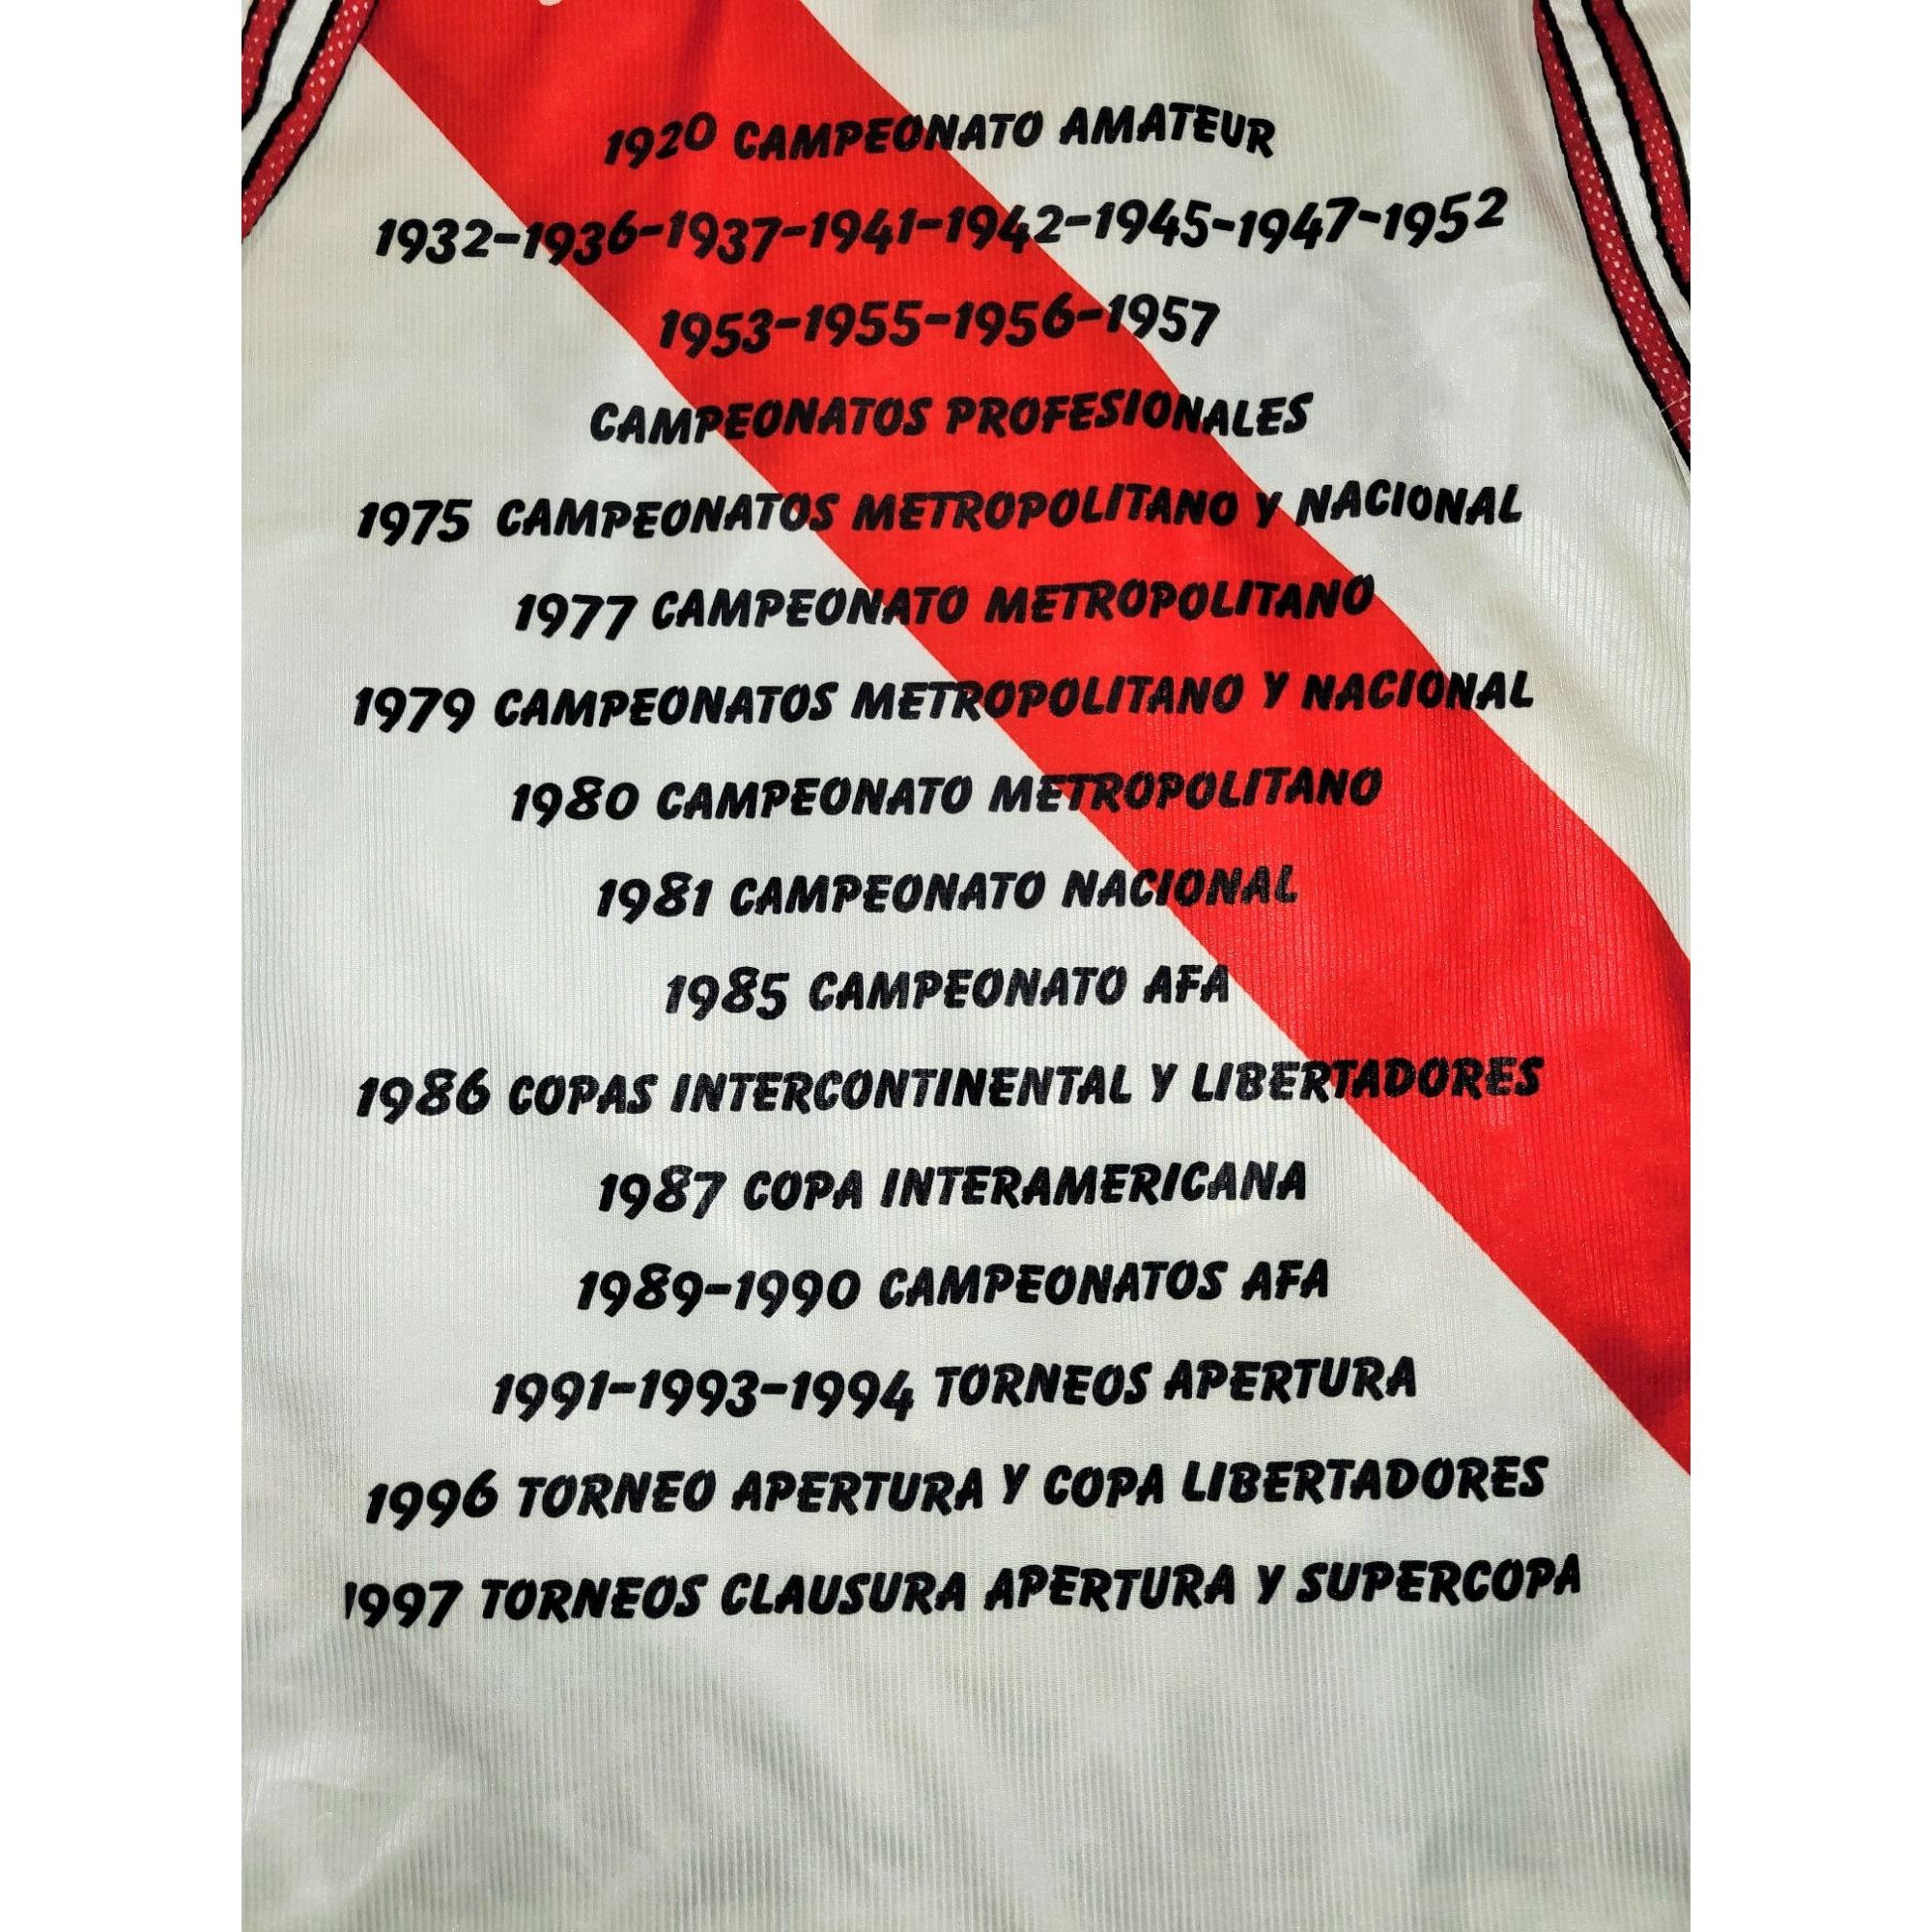 Adidas River Plate Adidas 1998 1999 2000 LTD EDITION Soccer Jersey Size US M / EU 48-50 / 2 - 3 Thumbnail